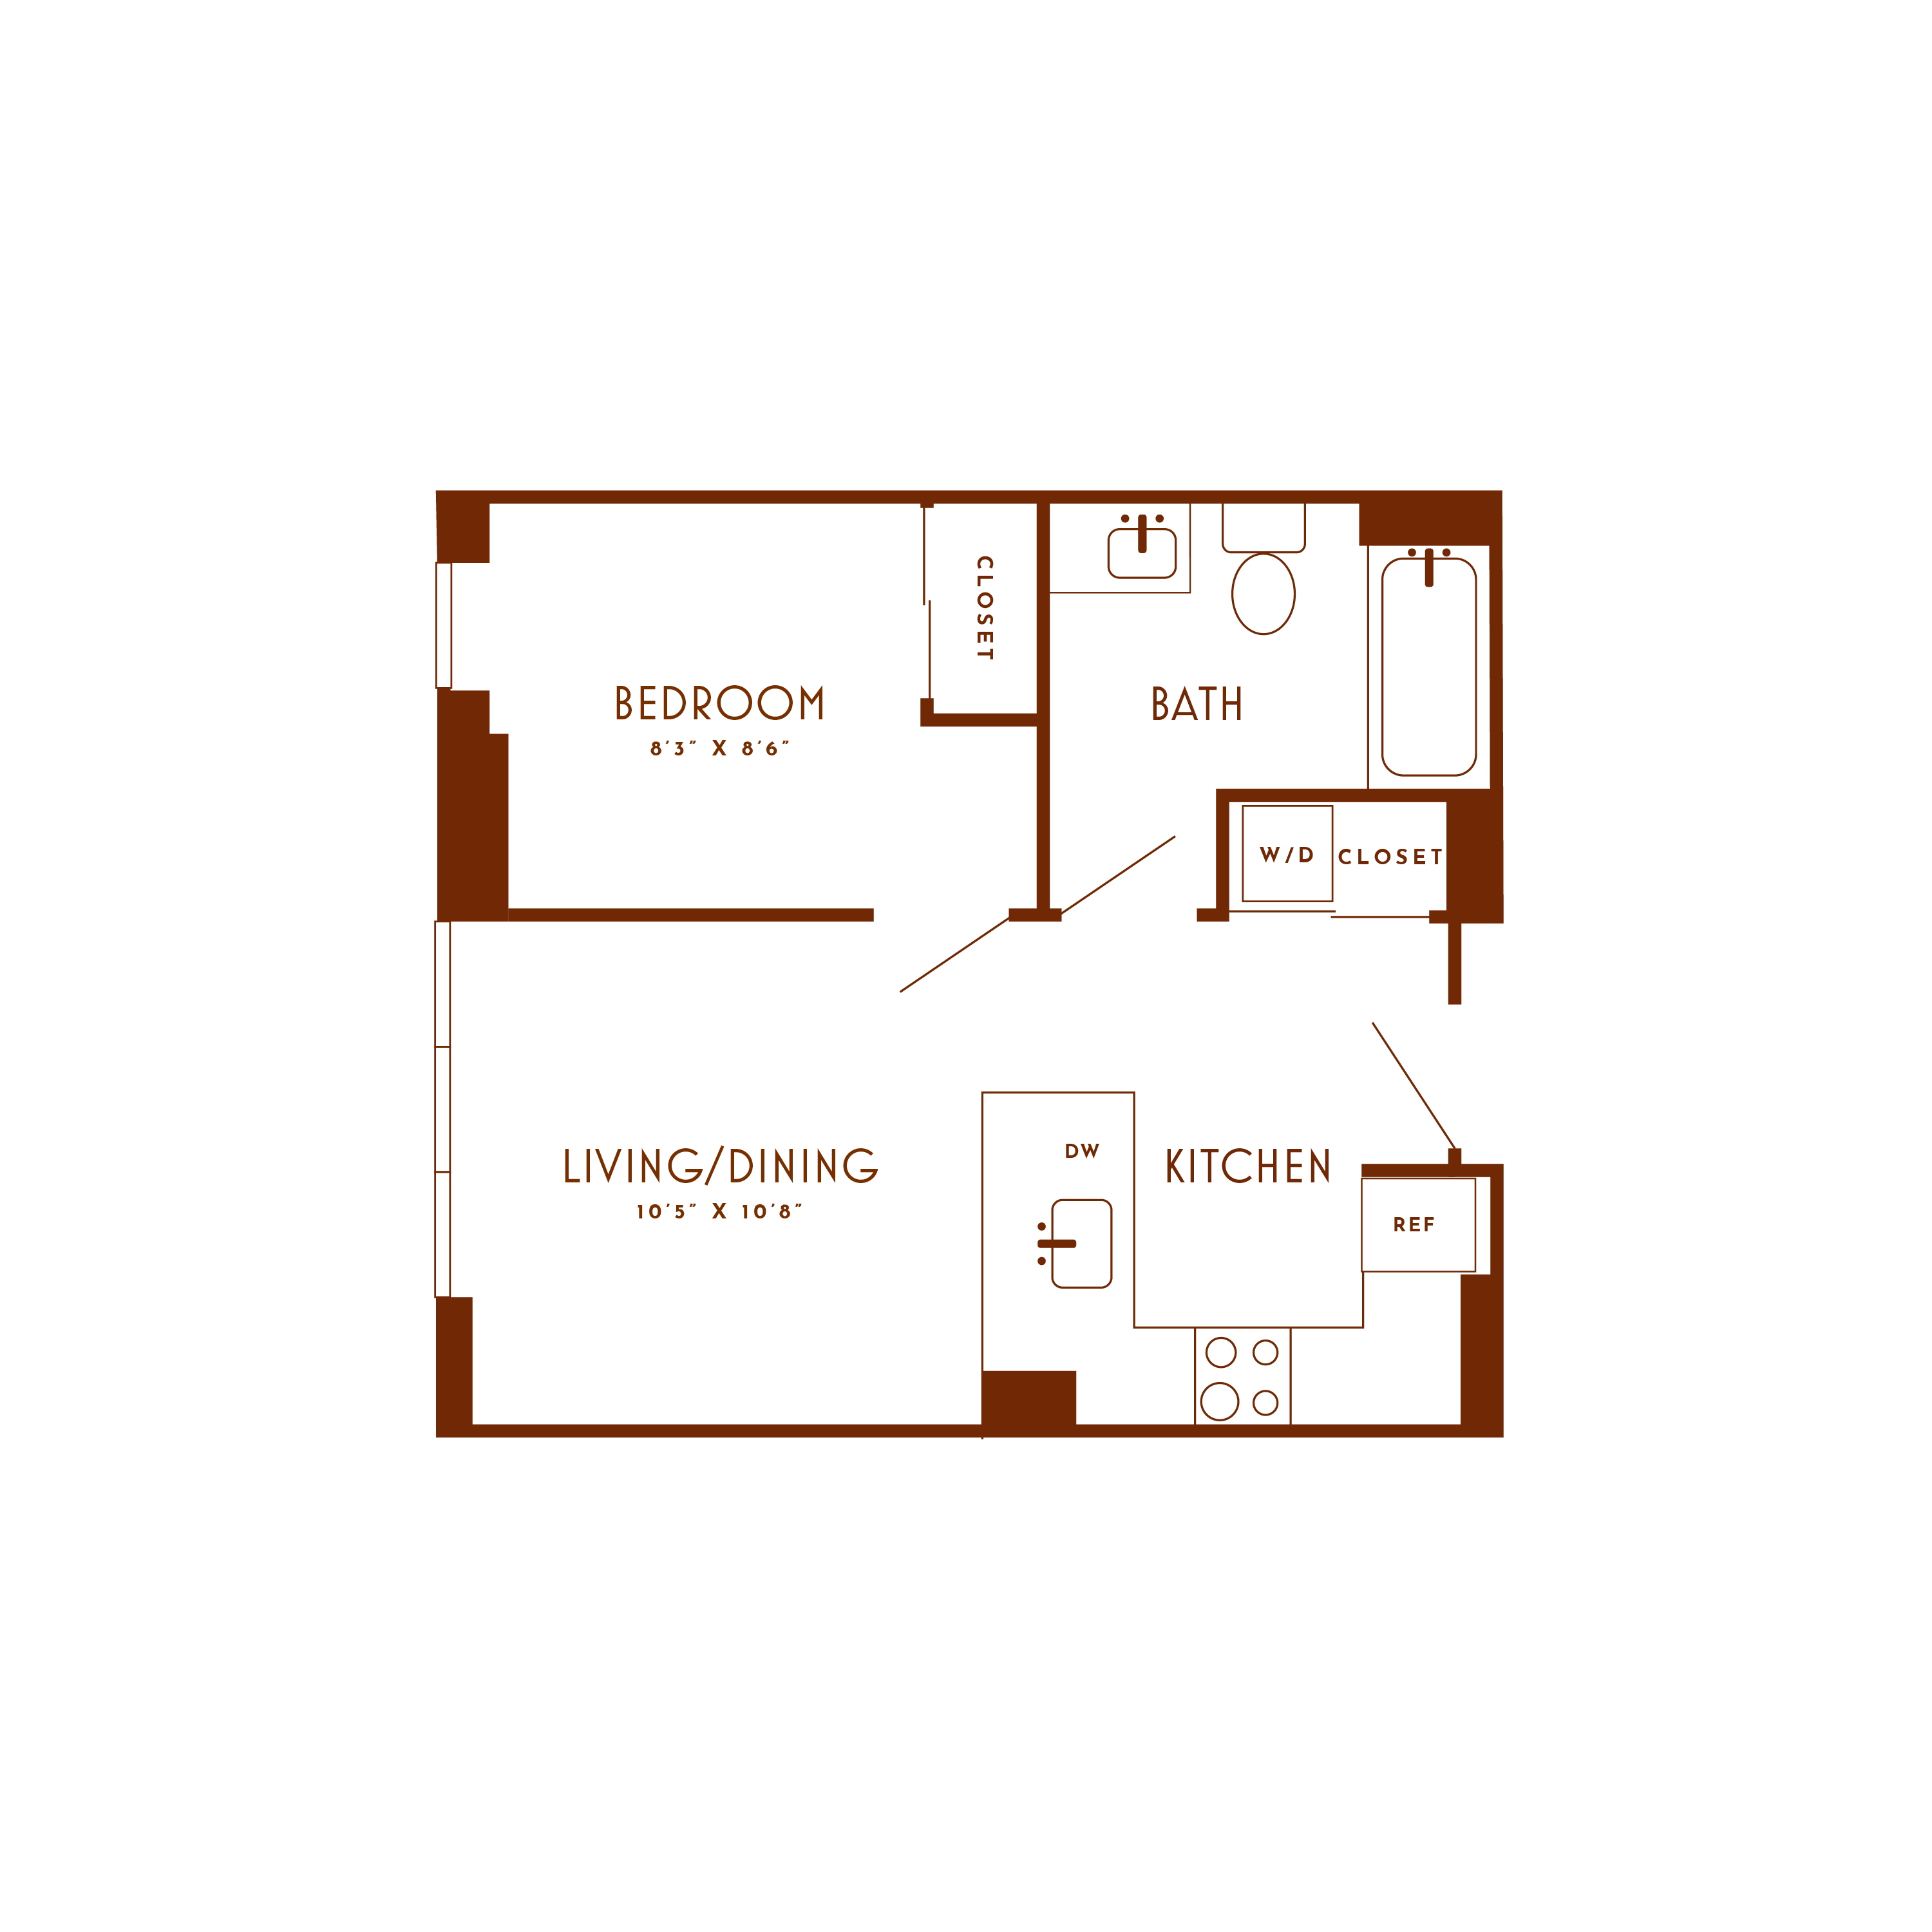 Floor plan image of unit 307